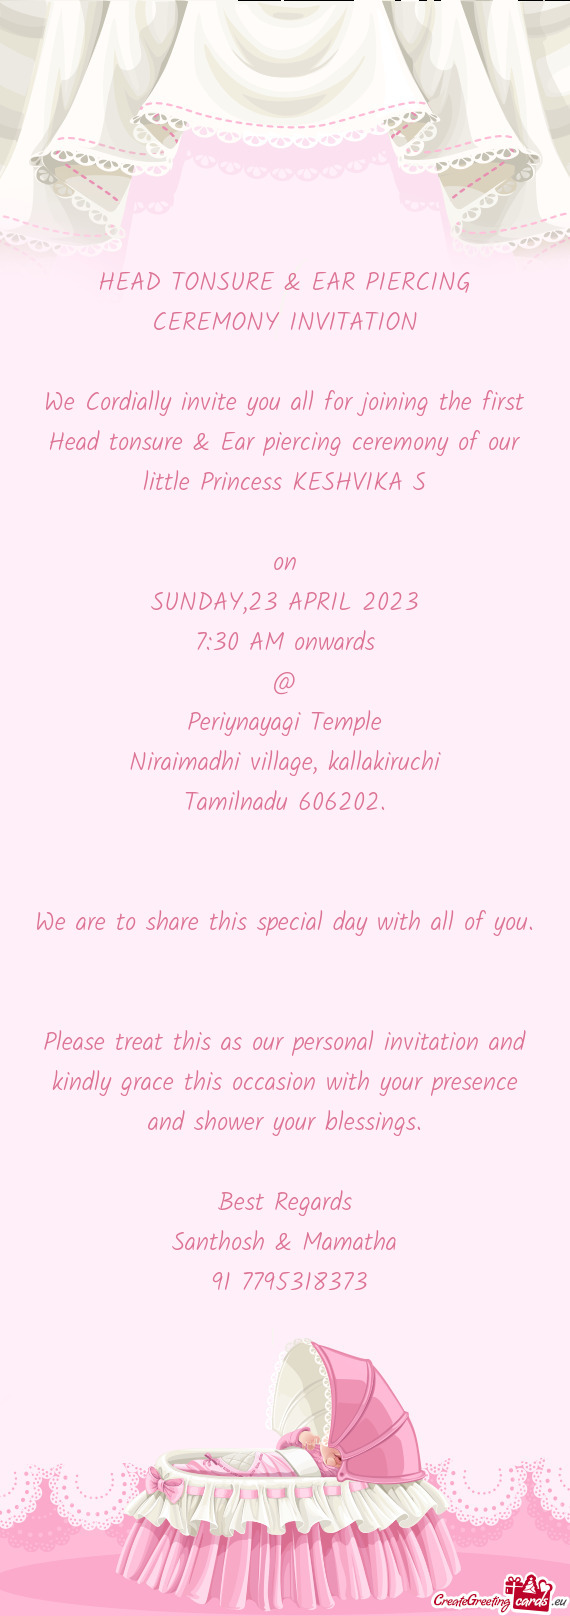 Periynayagi Temple